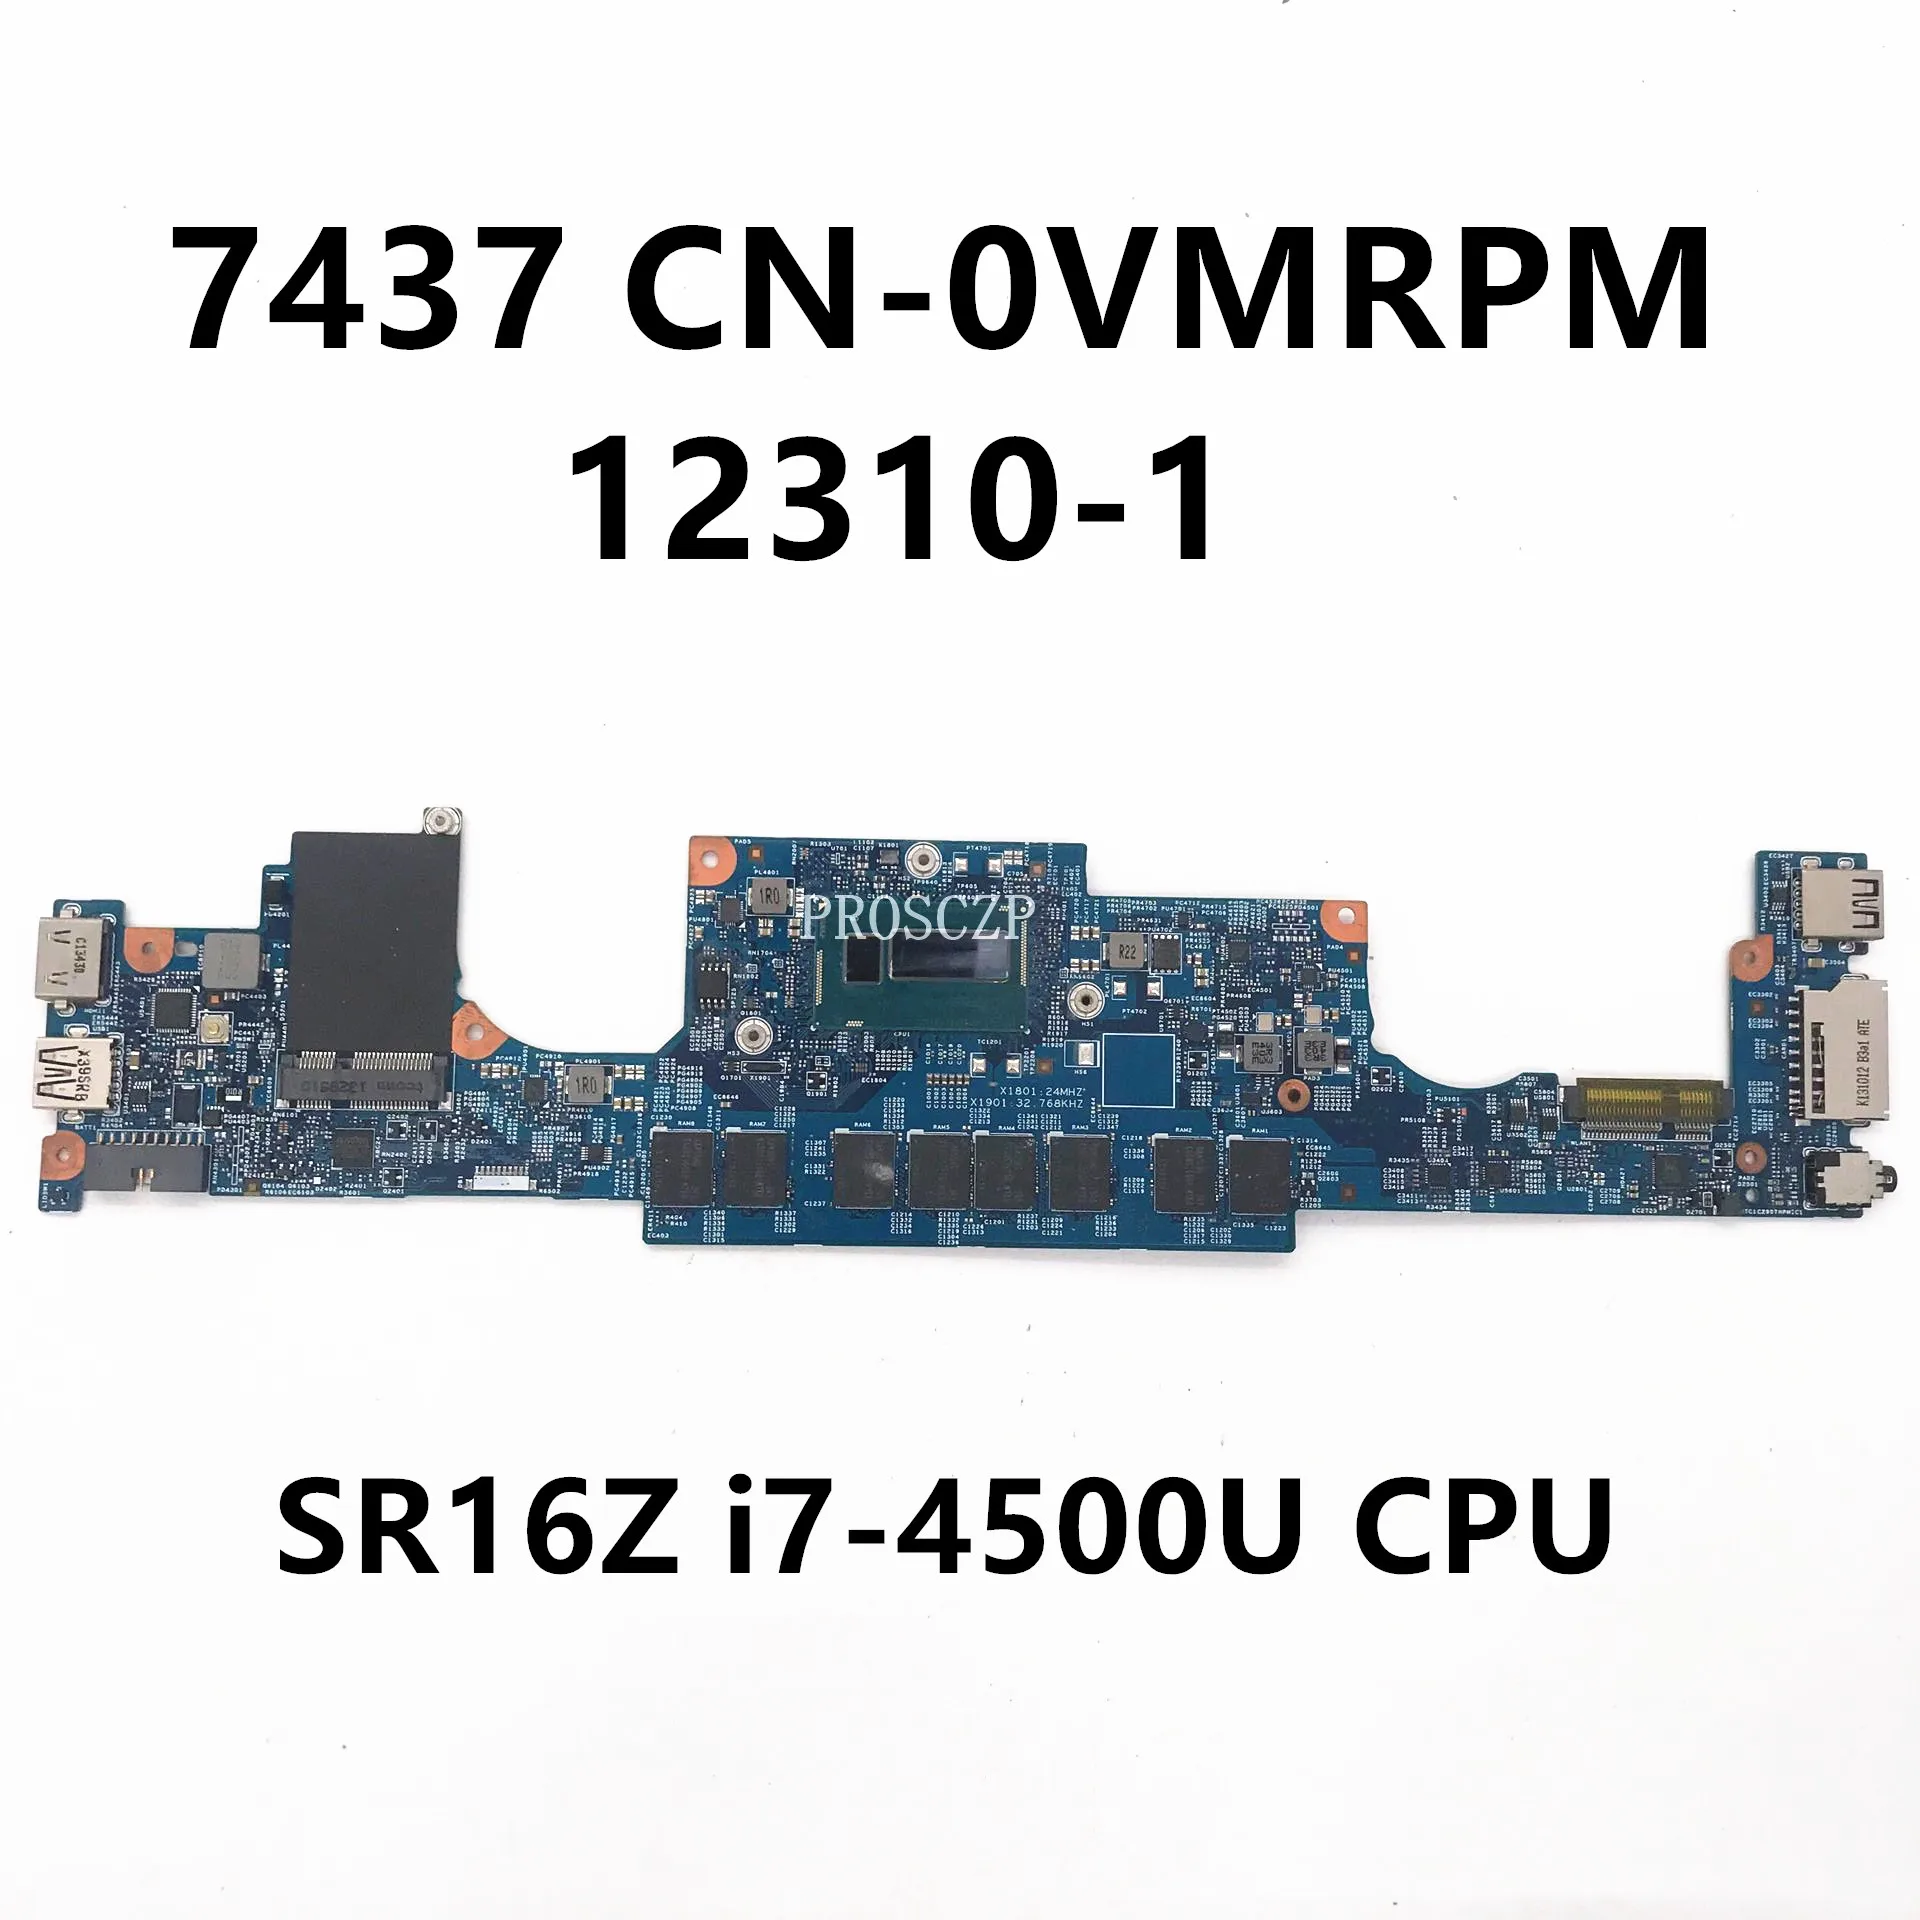 

CN-0VMRPM 0VMRPM VMRPM For Dell Inspiron 14 7000 7437 Laptop Motherboard 12310-1 With SR16Z i7-4500U CPU 100% Full Tested Good